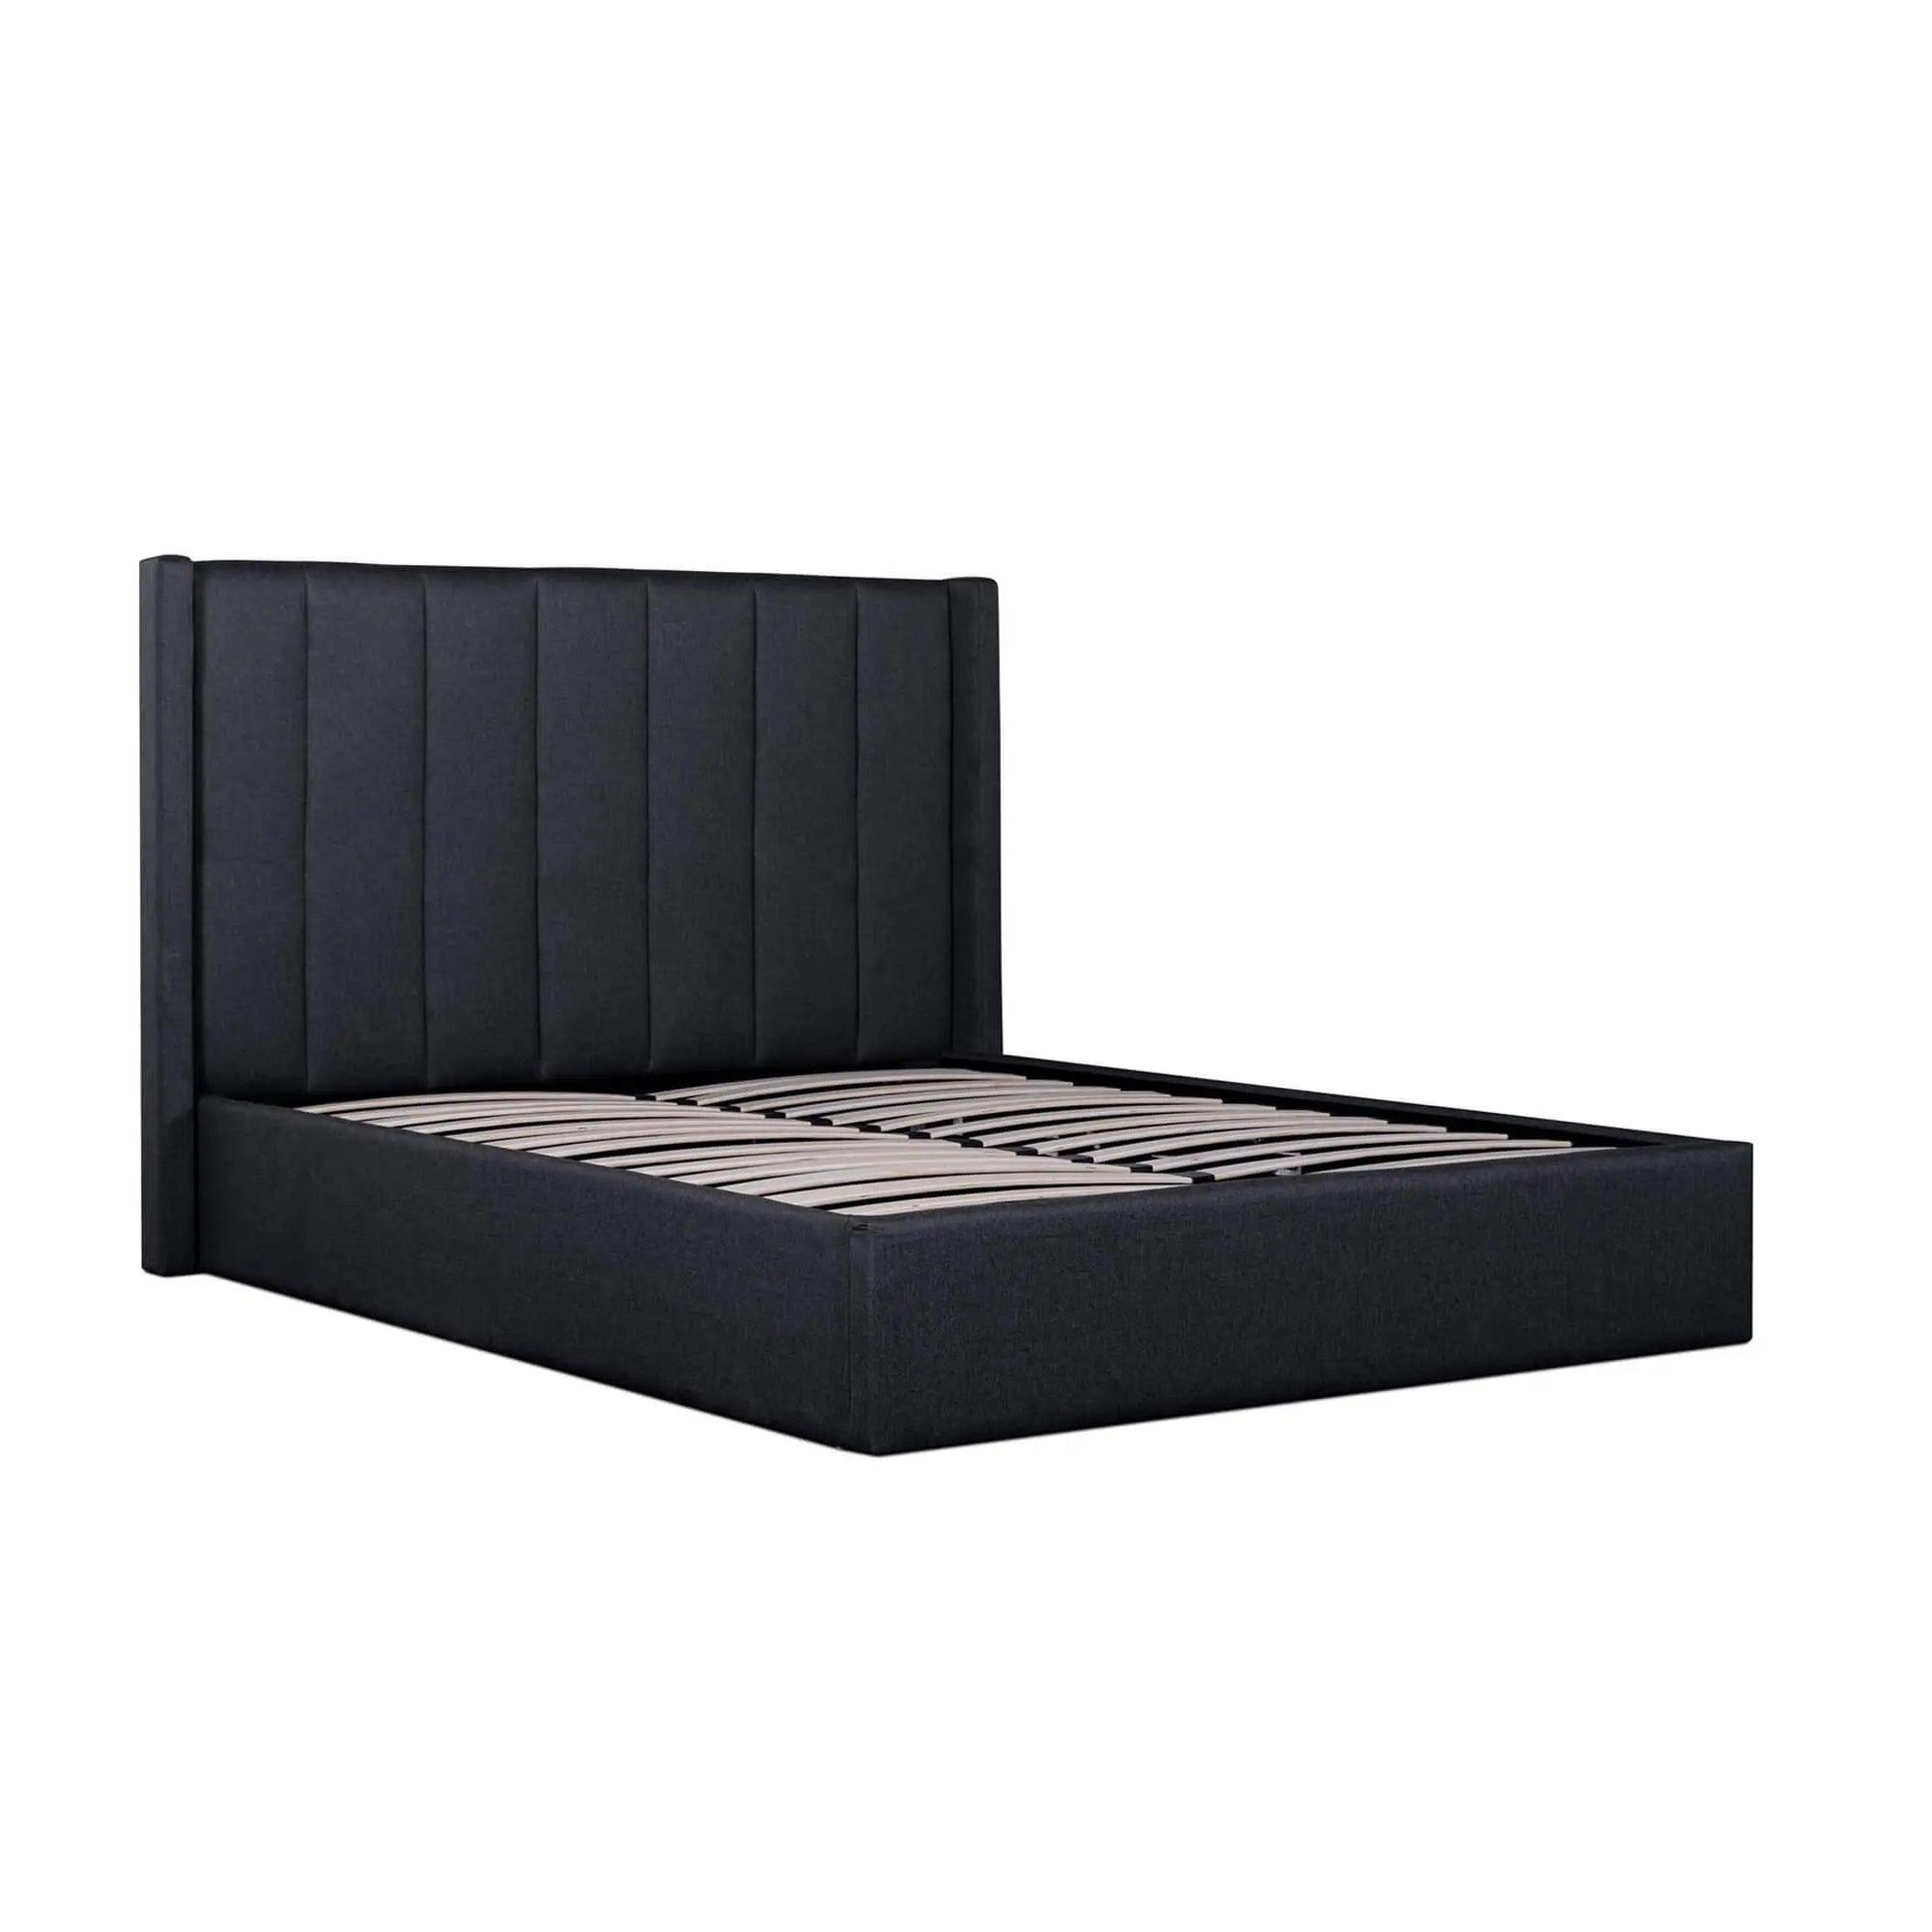 Calibre Fabric King Bed in Charcoal Grey with Storage BD6021-YO - BedsBD6021-YO 2